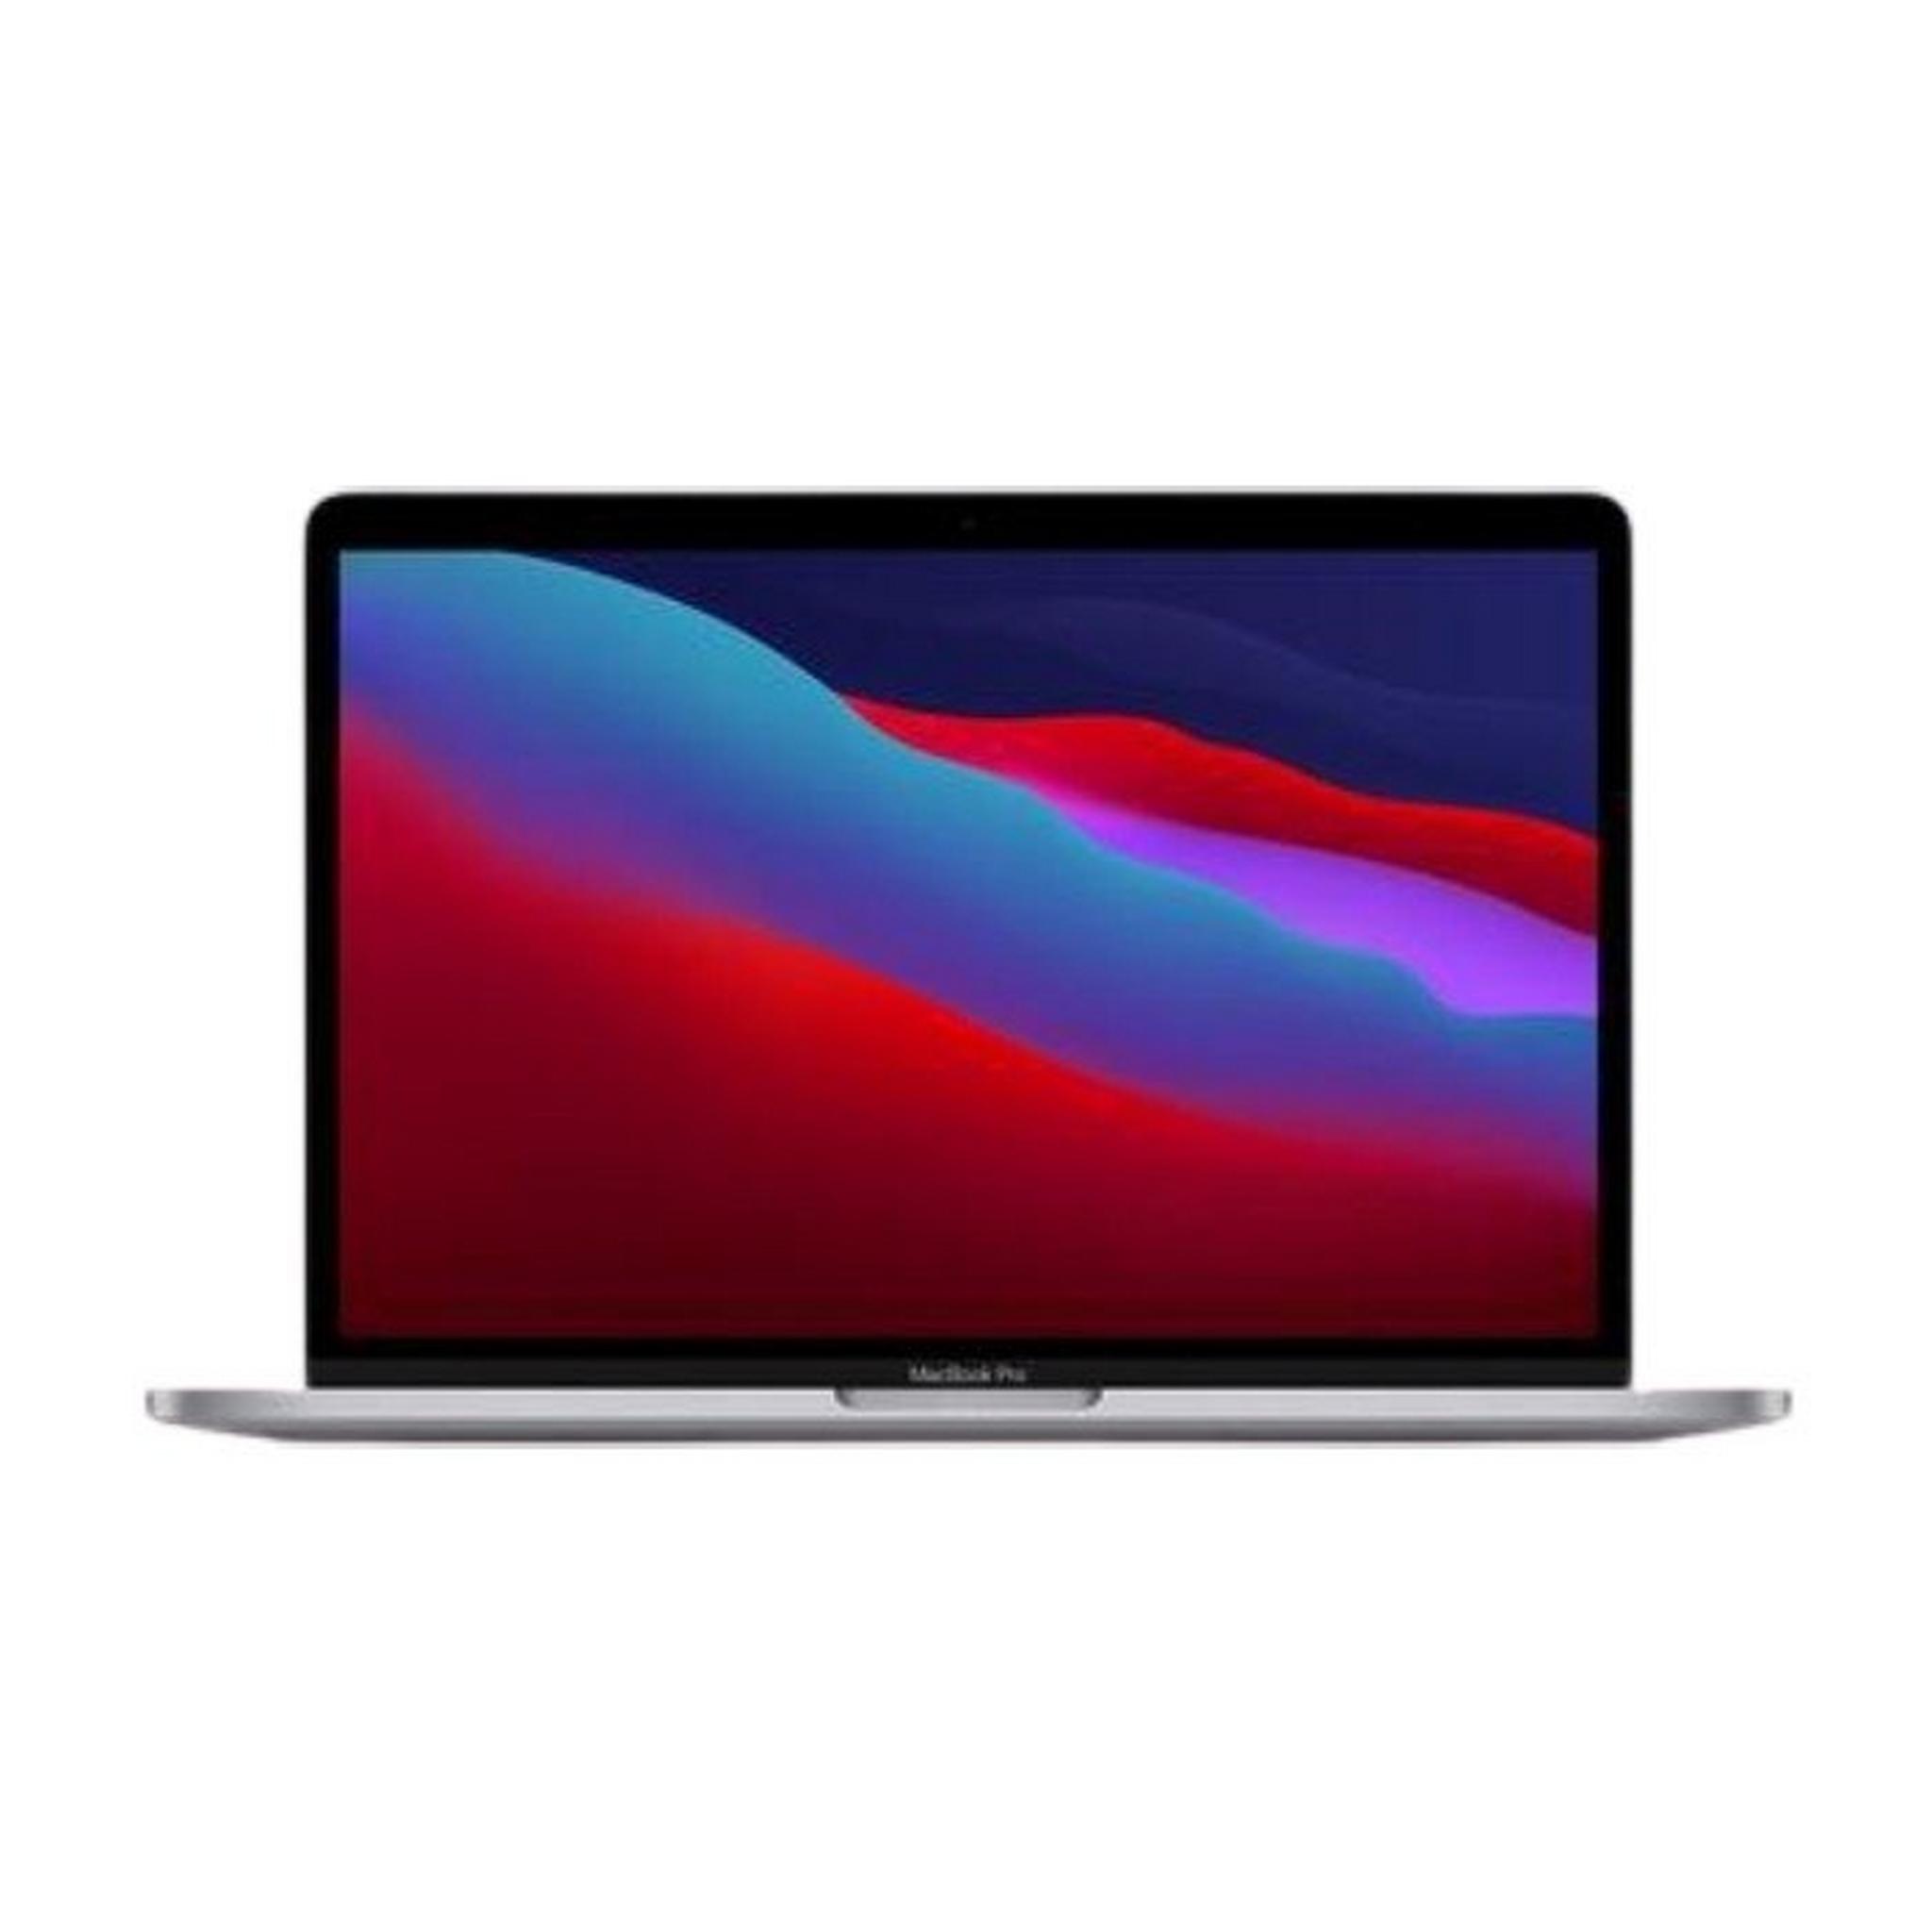 Apple Macbook Pro M1 8GB RAM 256GB SSD 13.3" Laptop - Space Grey